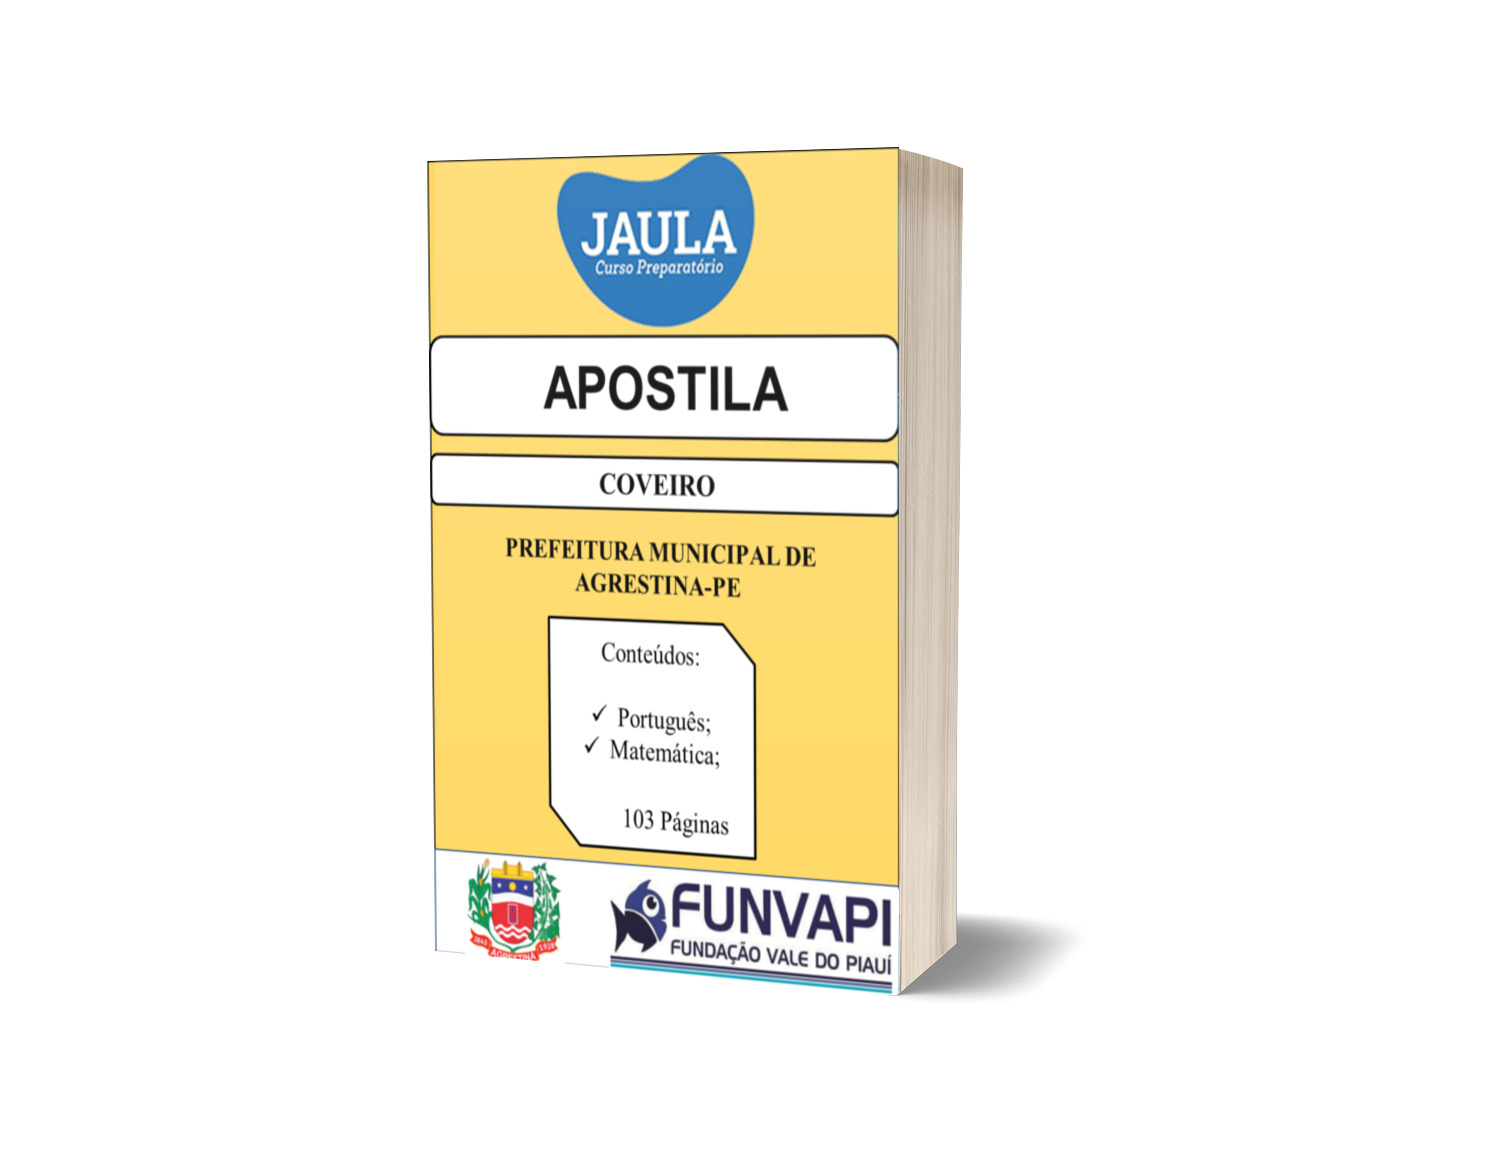 APOSTILA/COVEIRO/AGRESTINA-PE